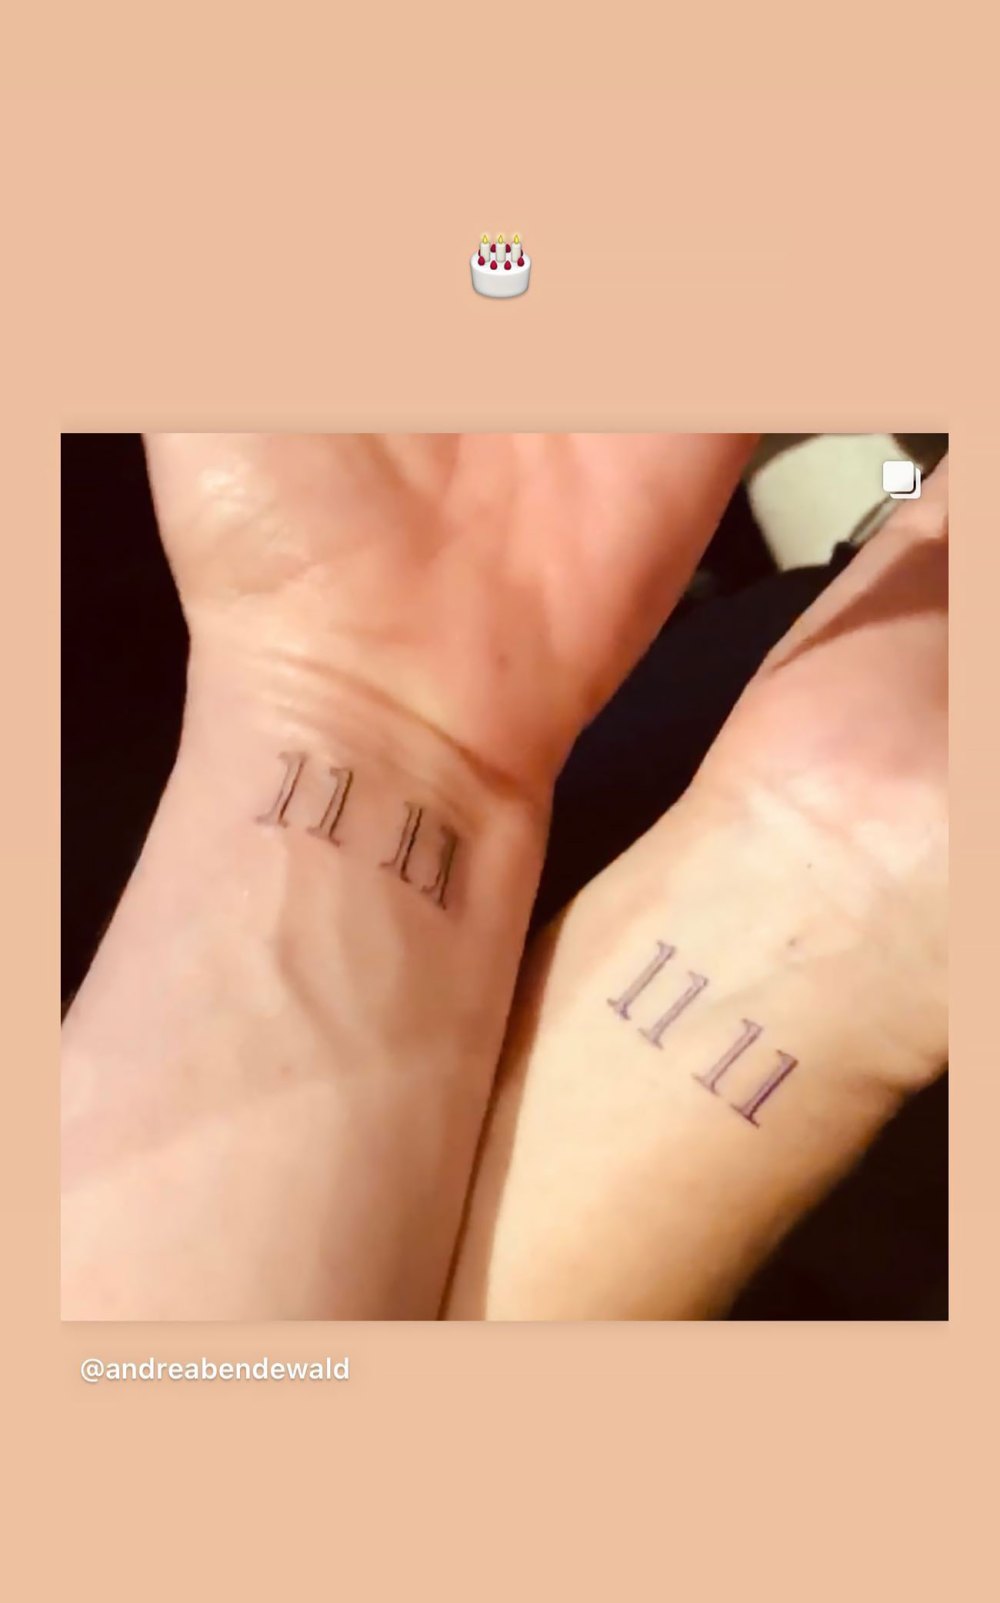 Jennifer Aniston Reveals Meaning Behind Her ’11 11’ Wrist Tattoo